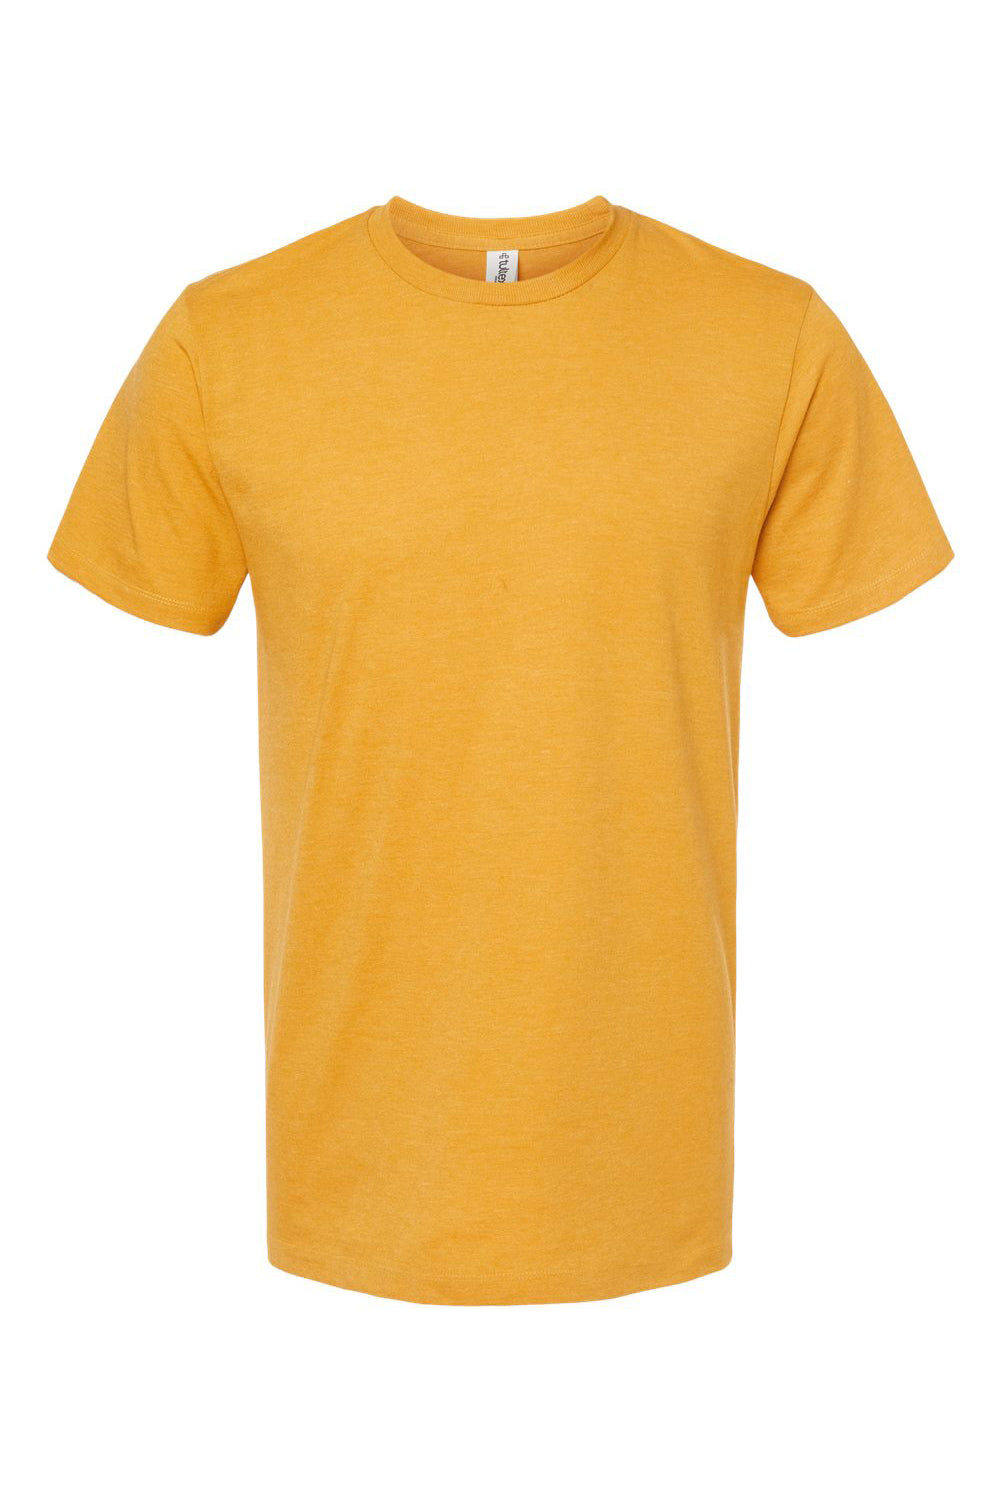 Tultex 541 Mens Premium Short Sleeve Crewneck T-Shirt Heather Antique Gold Flat Front